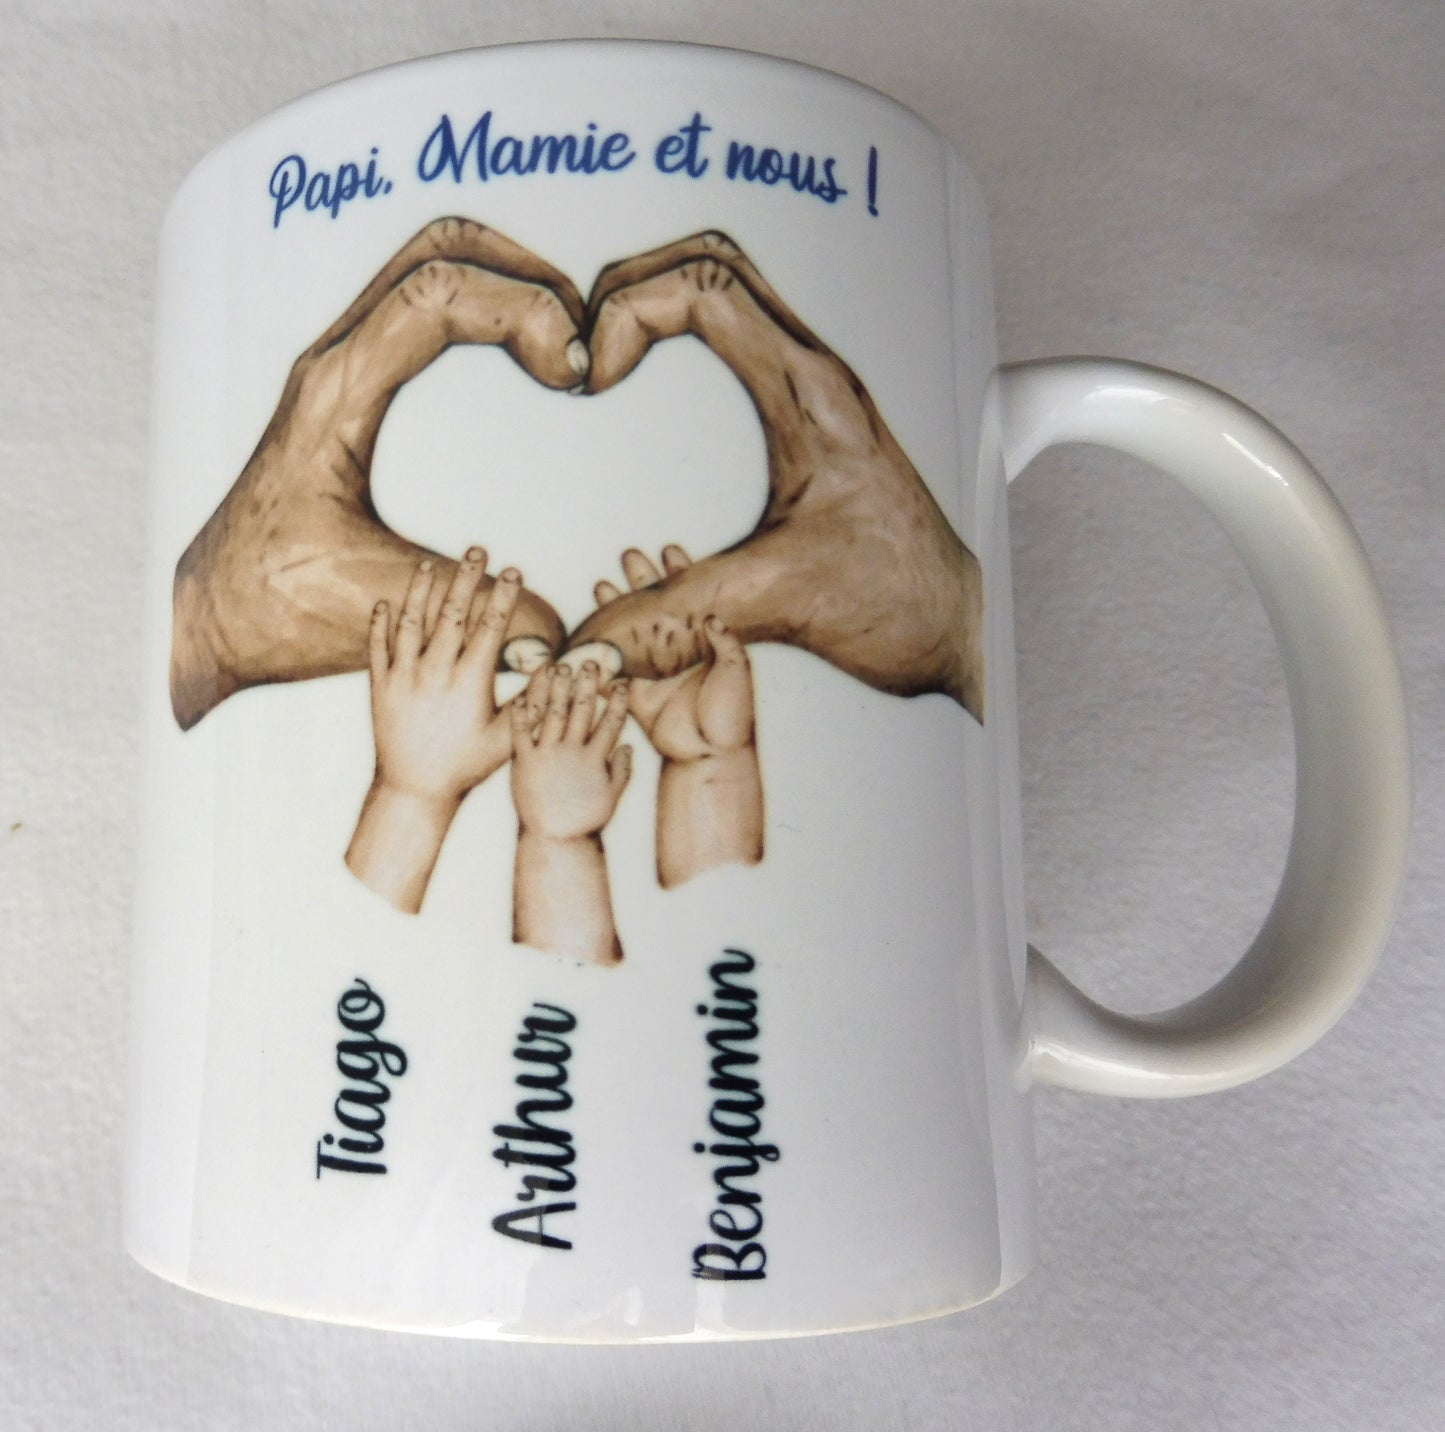 Personalized mug hands of grandpa and grandma and their 4 grandchildren